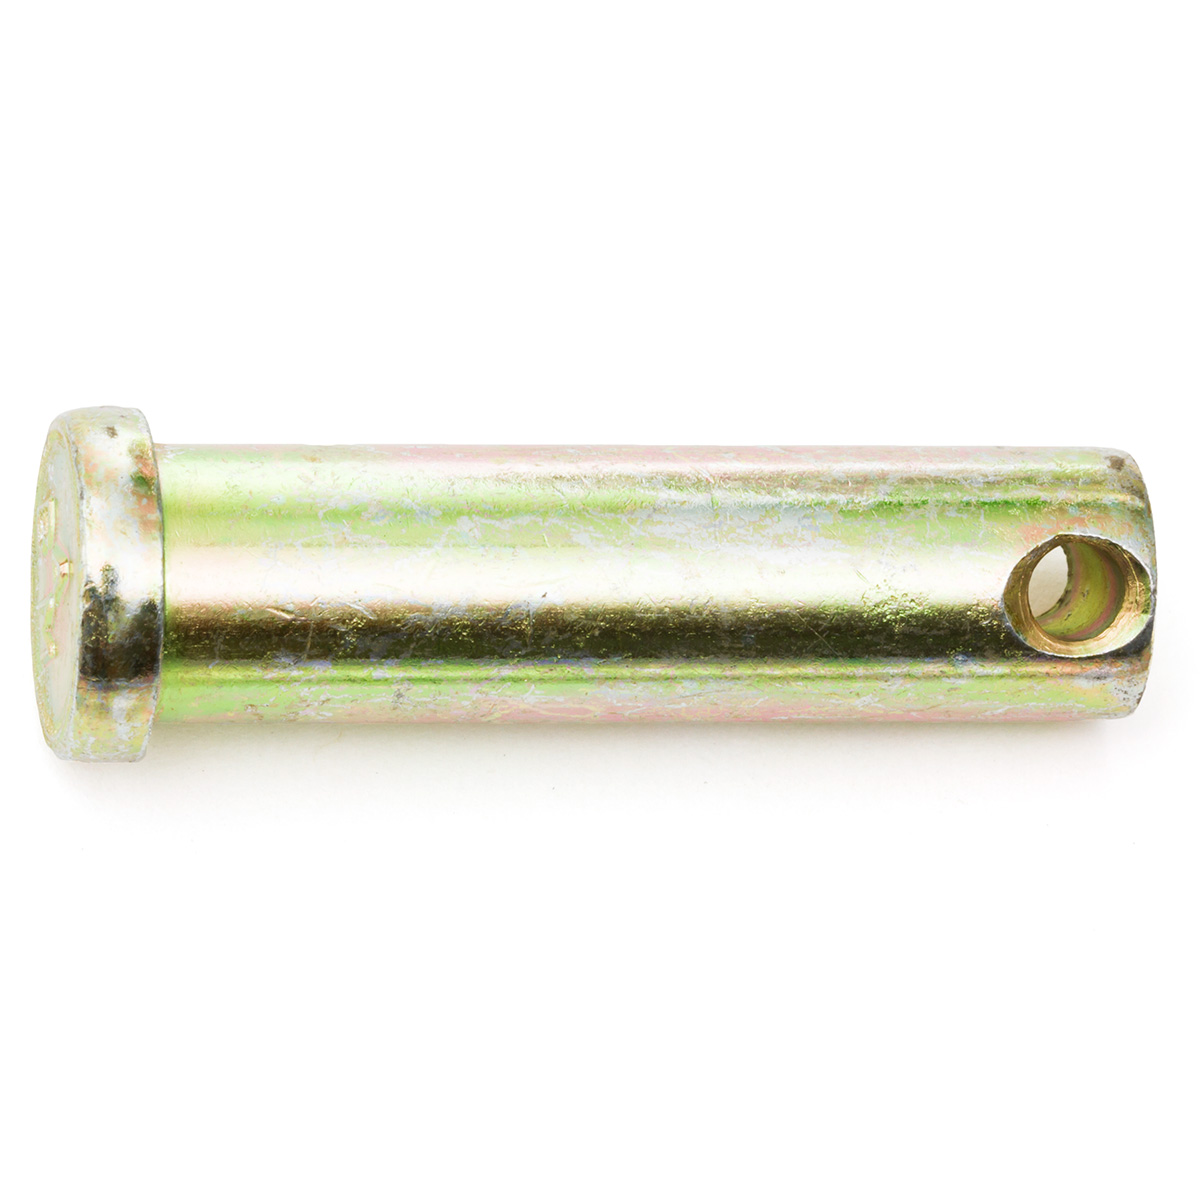 Split Pin 4mm diameter stainless steel